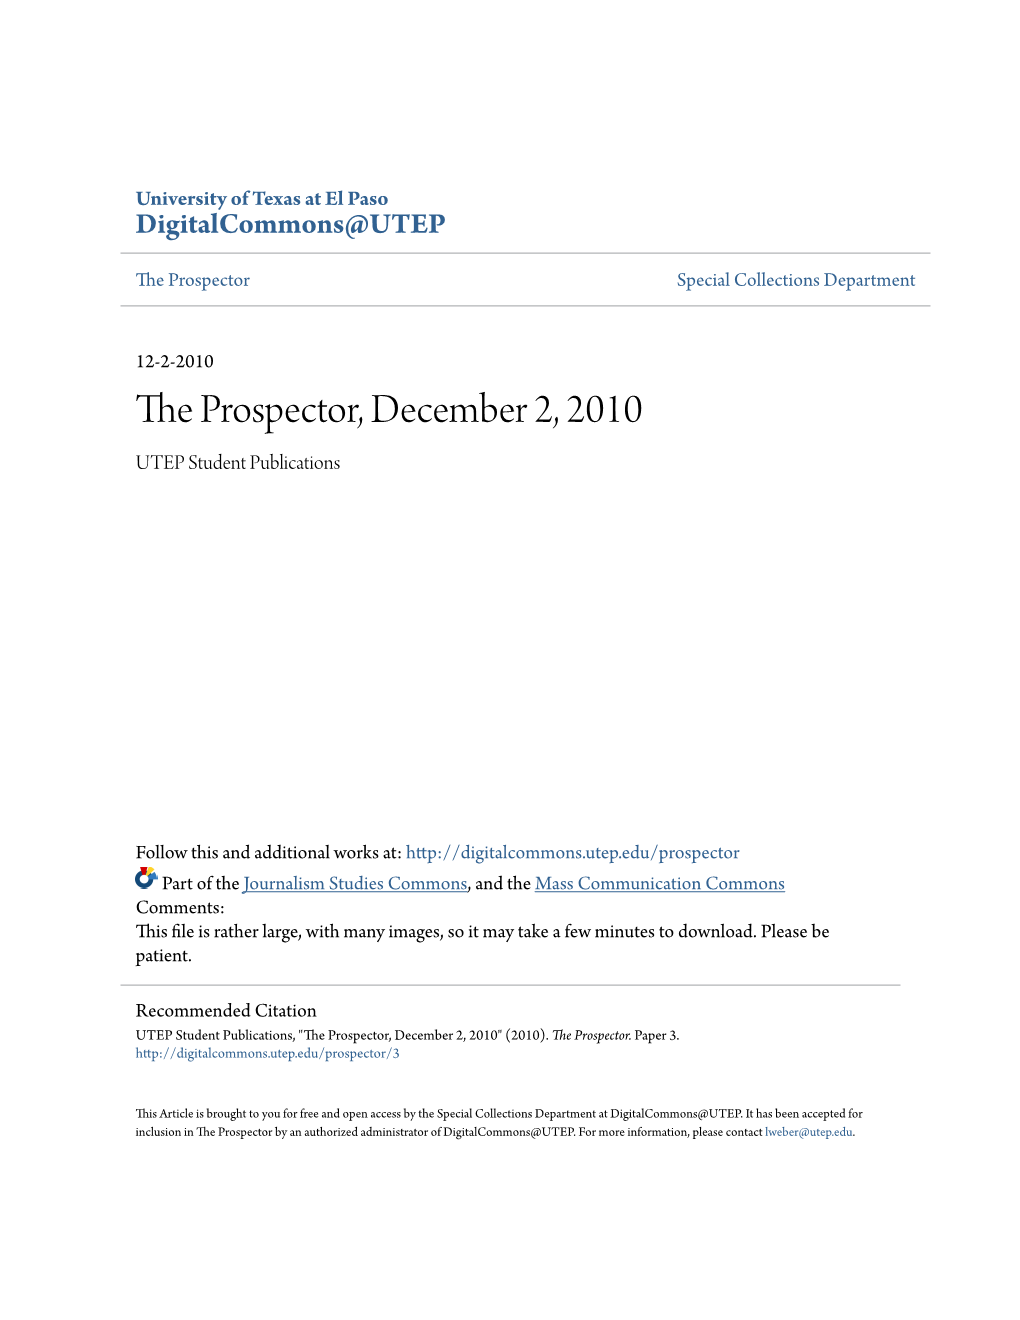 The Prospector, December 2, 2010